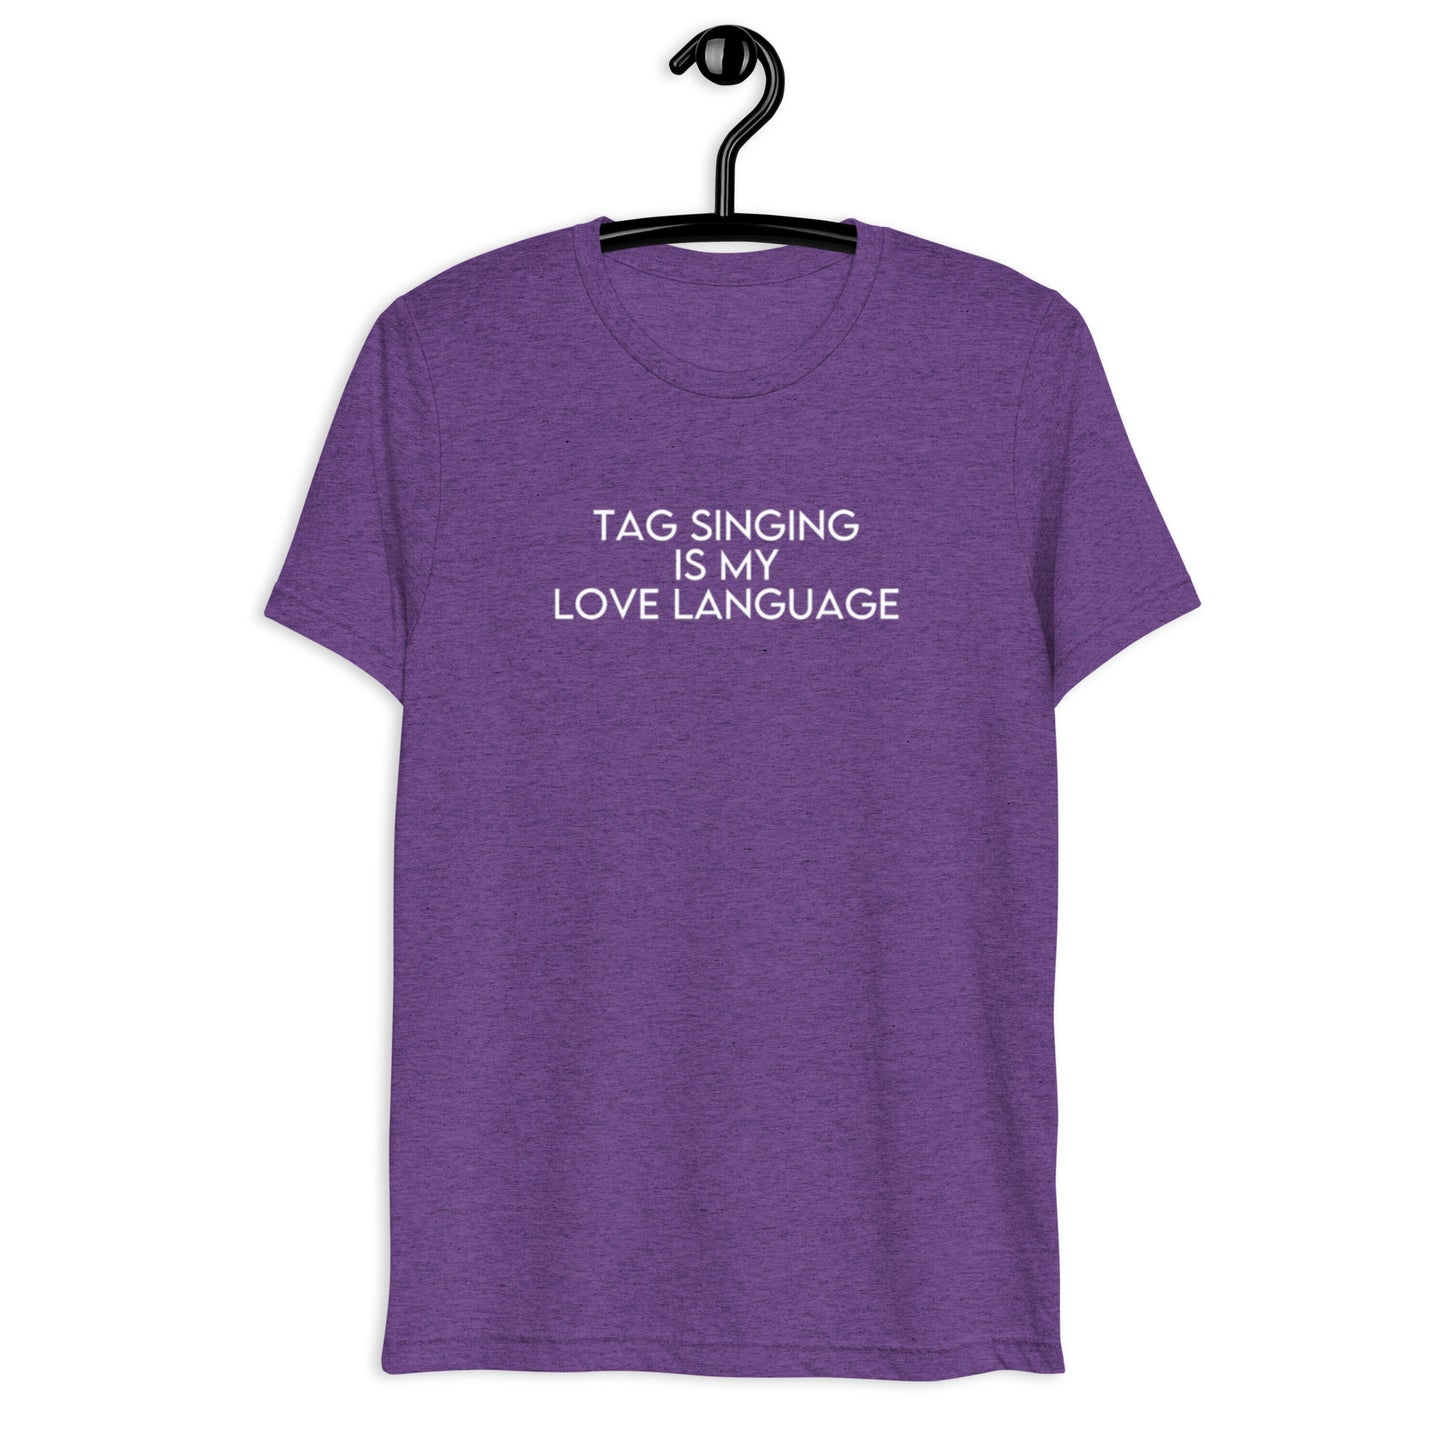 Tag singing is my love language - Super soft Short sleeve t-shirt